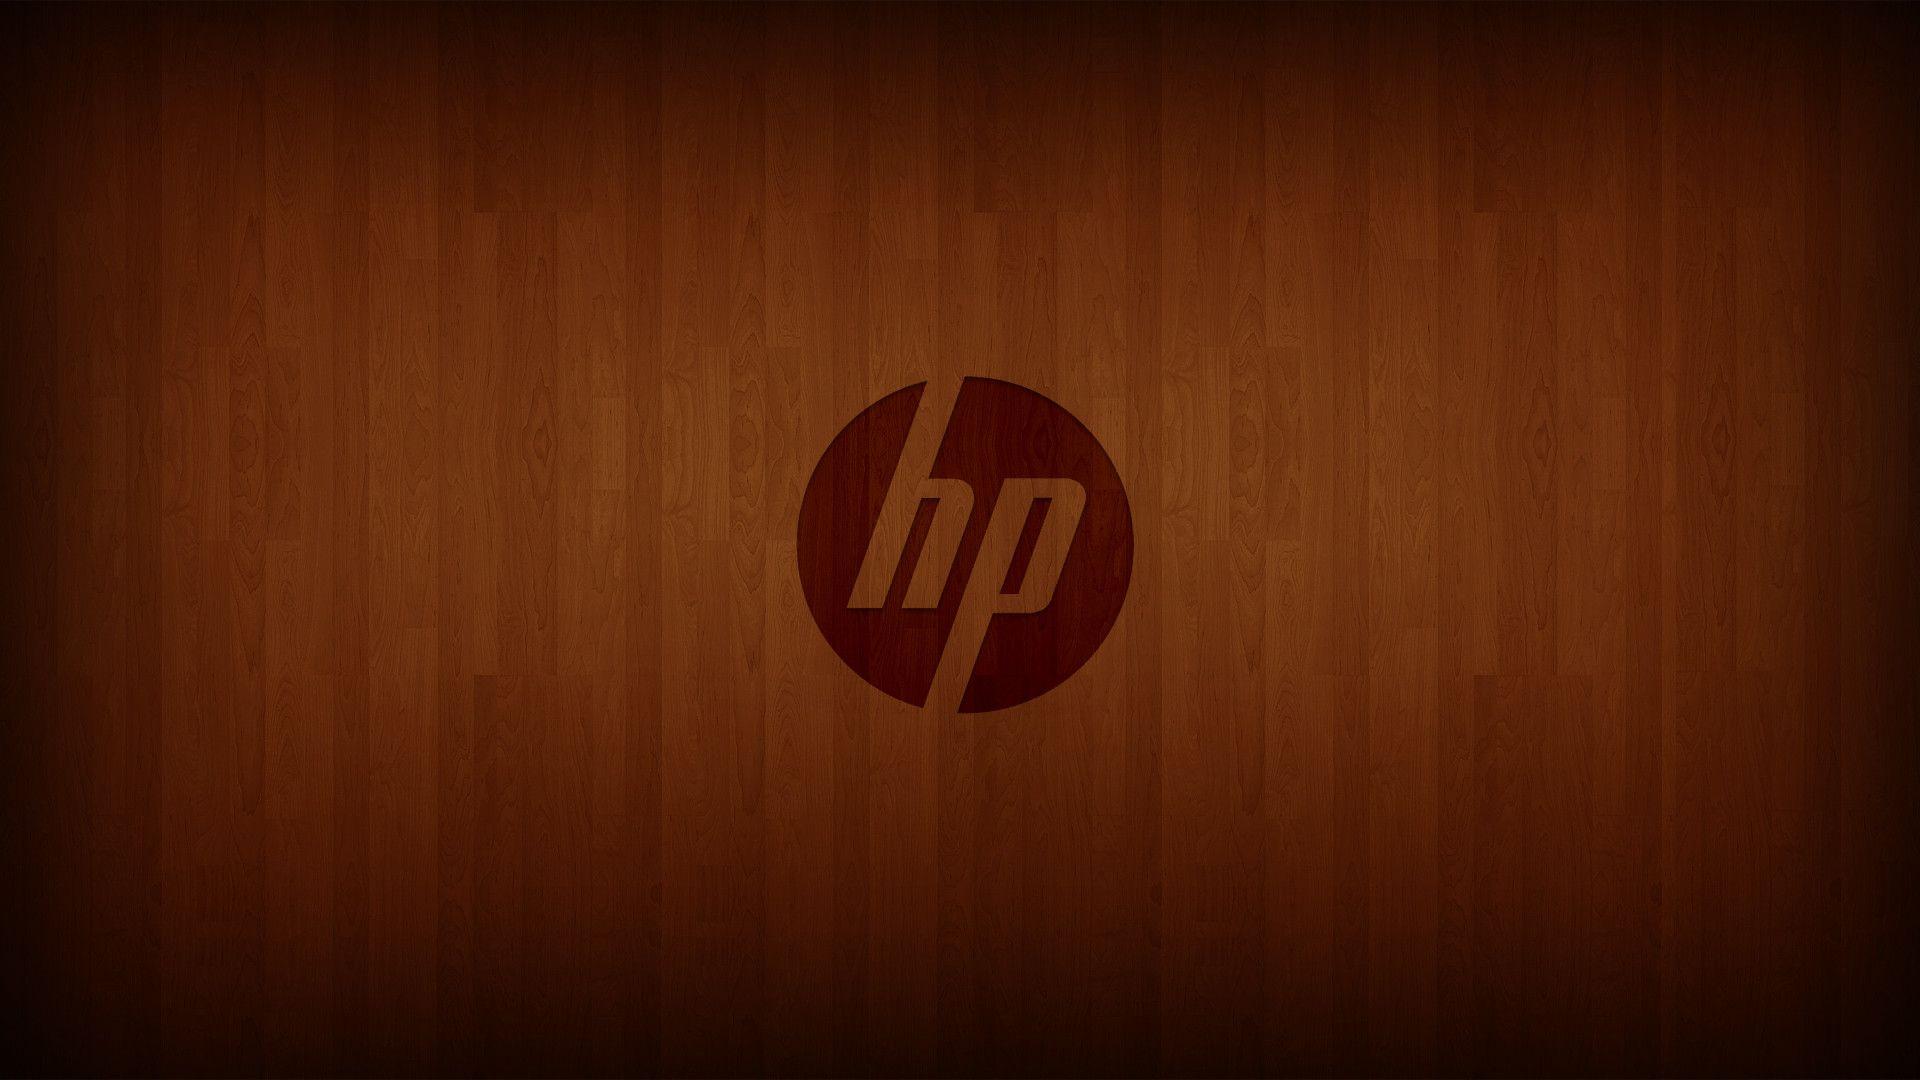 لپ تاپ مهندسی HP